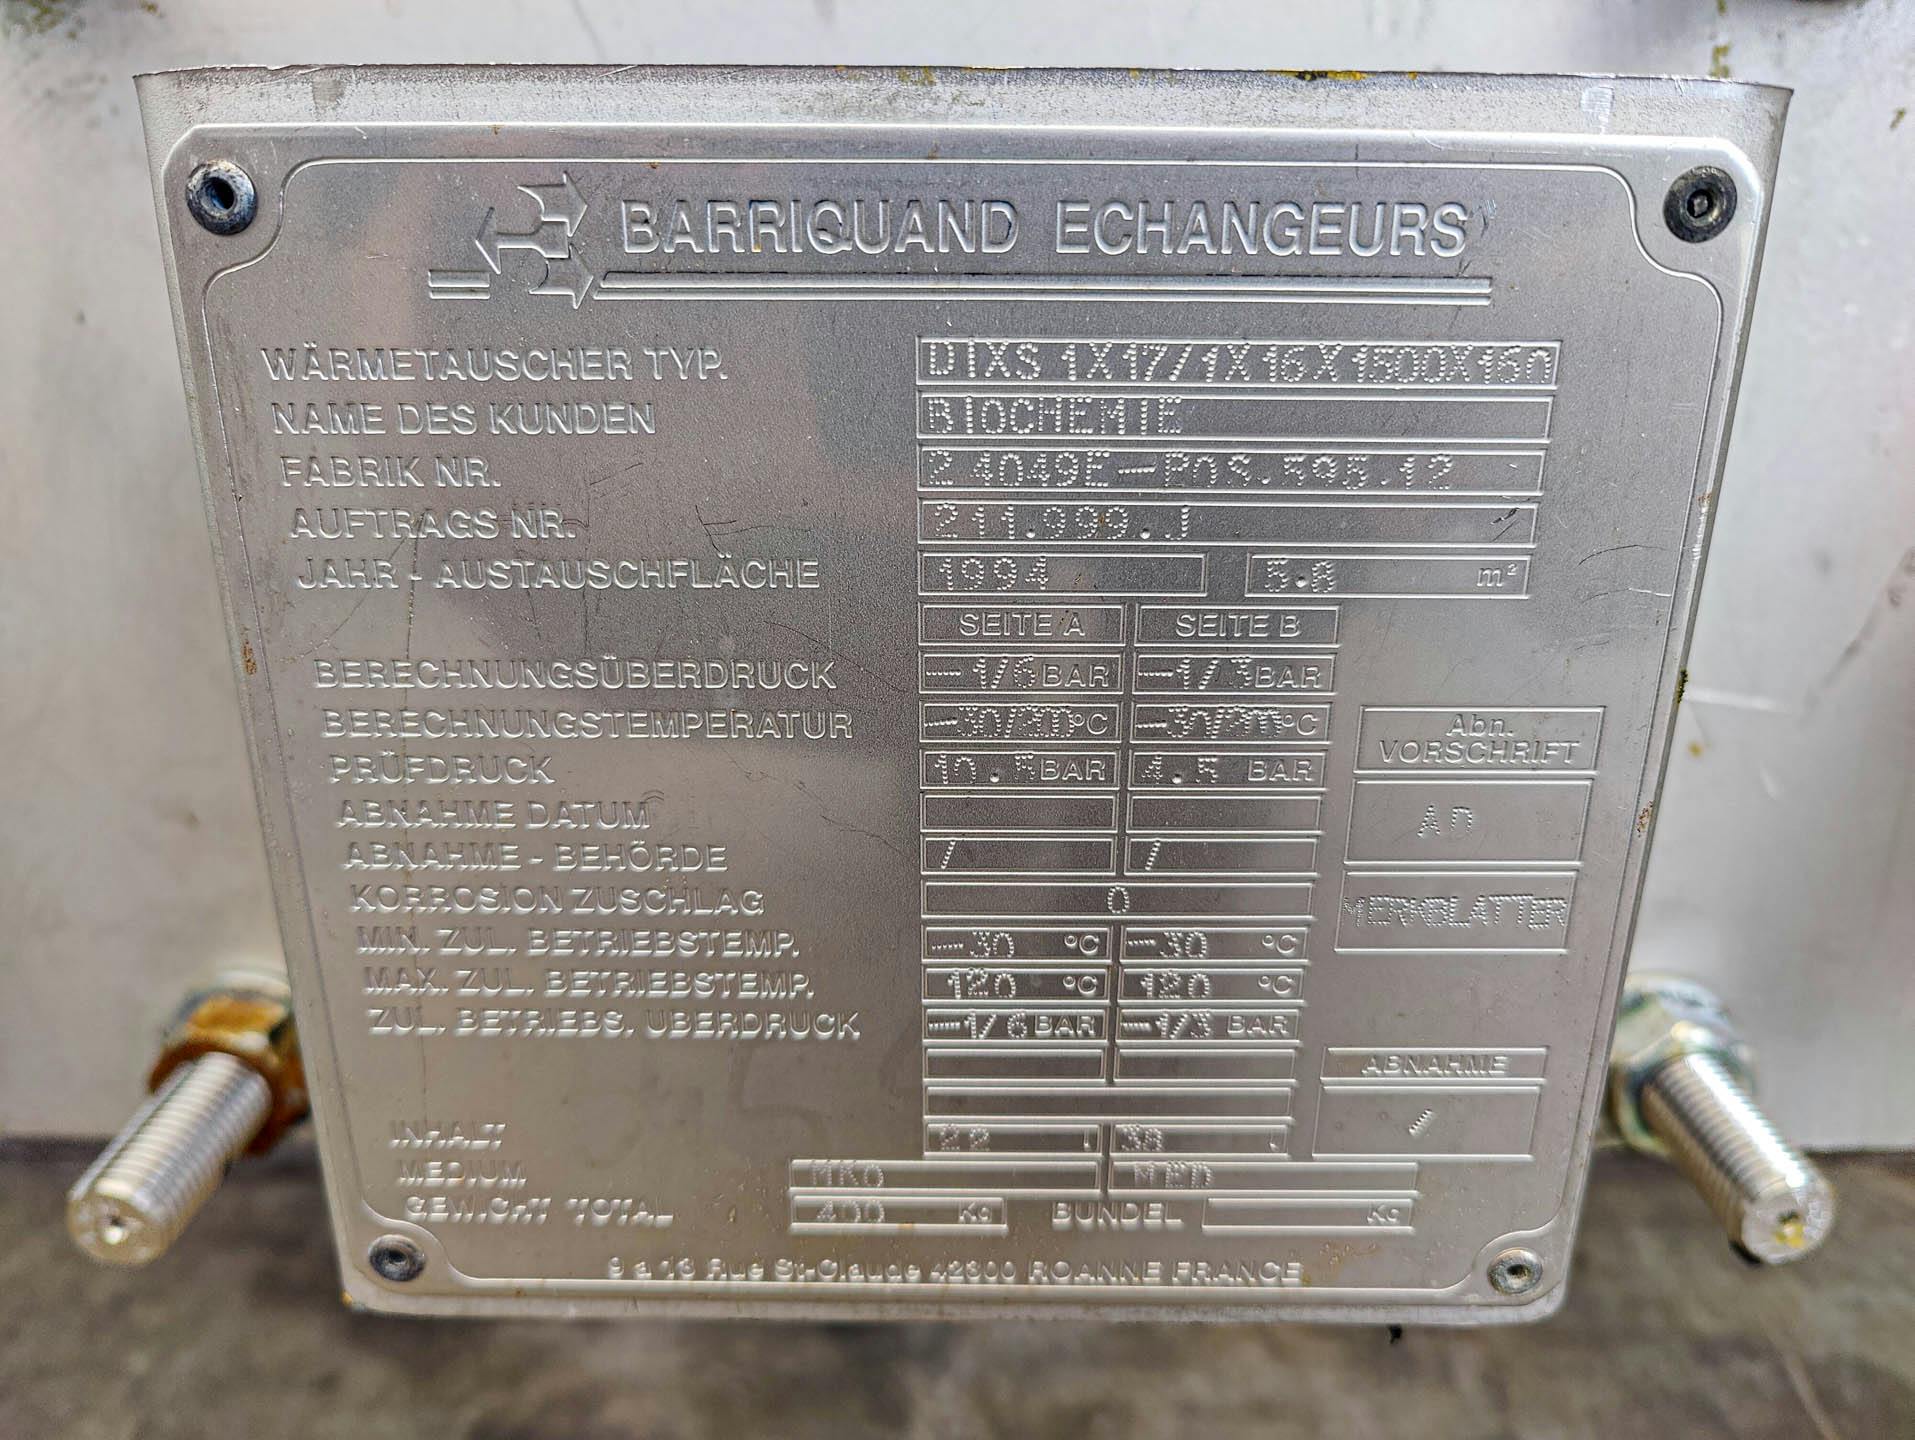 Barriquand Platular DIXS 1x17/1x16/1500/160 welded plate heat exchanger - Plattenwärmetauscher - image 6